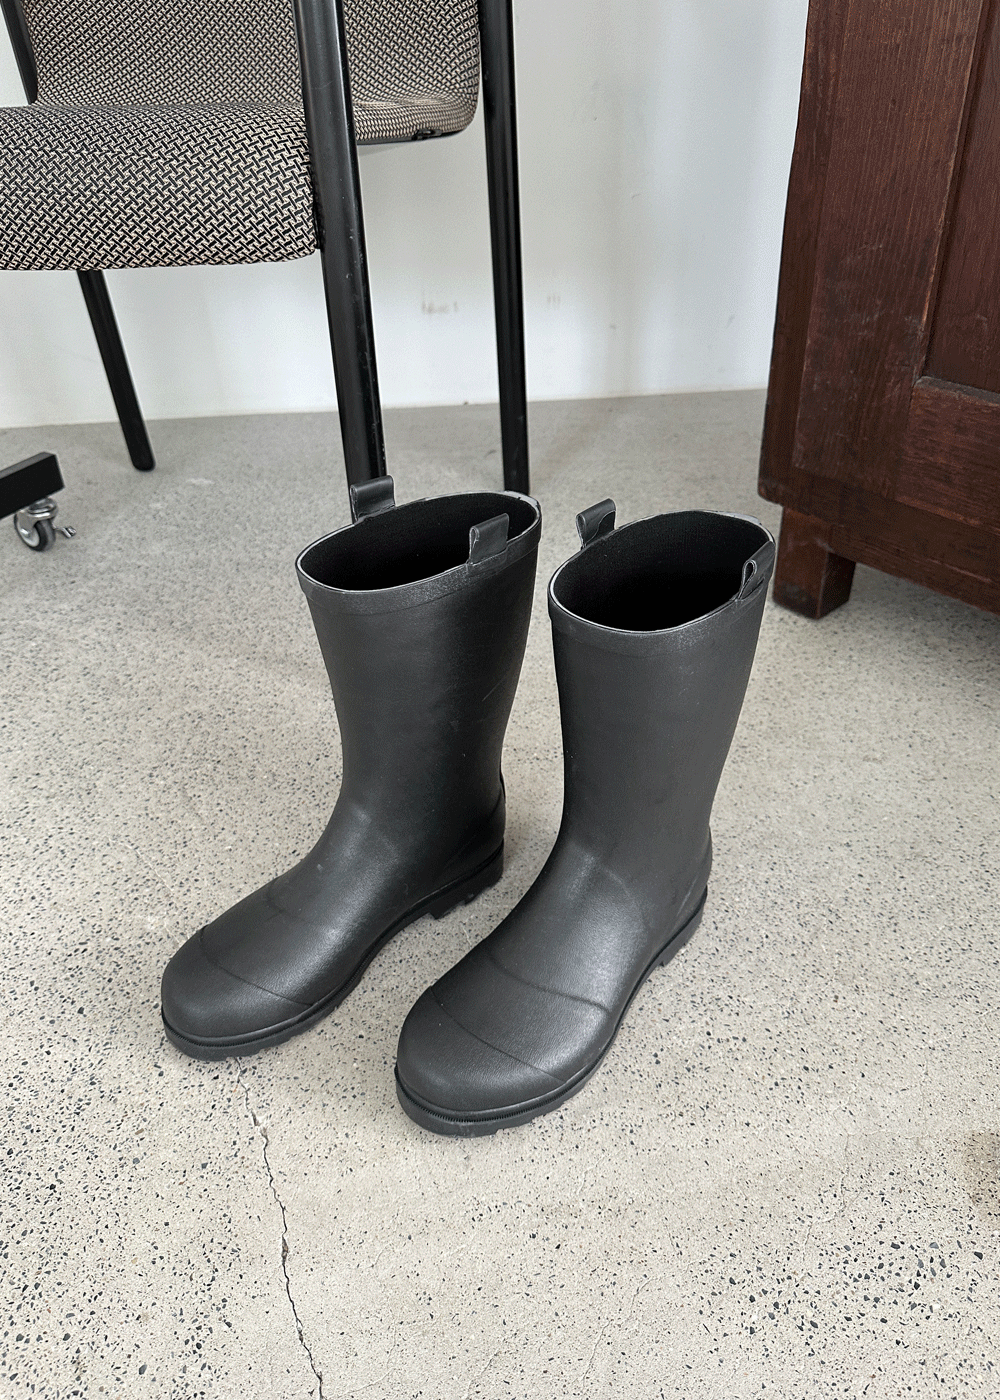 Half rain boots